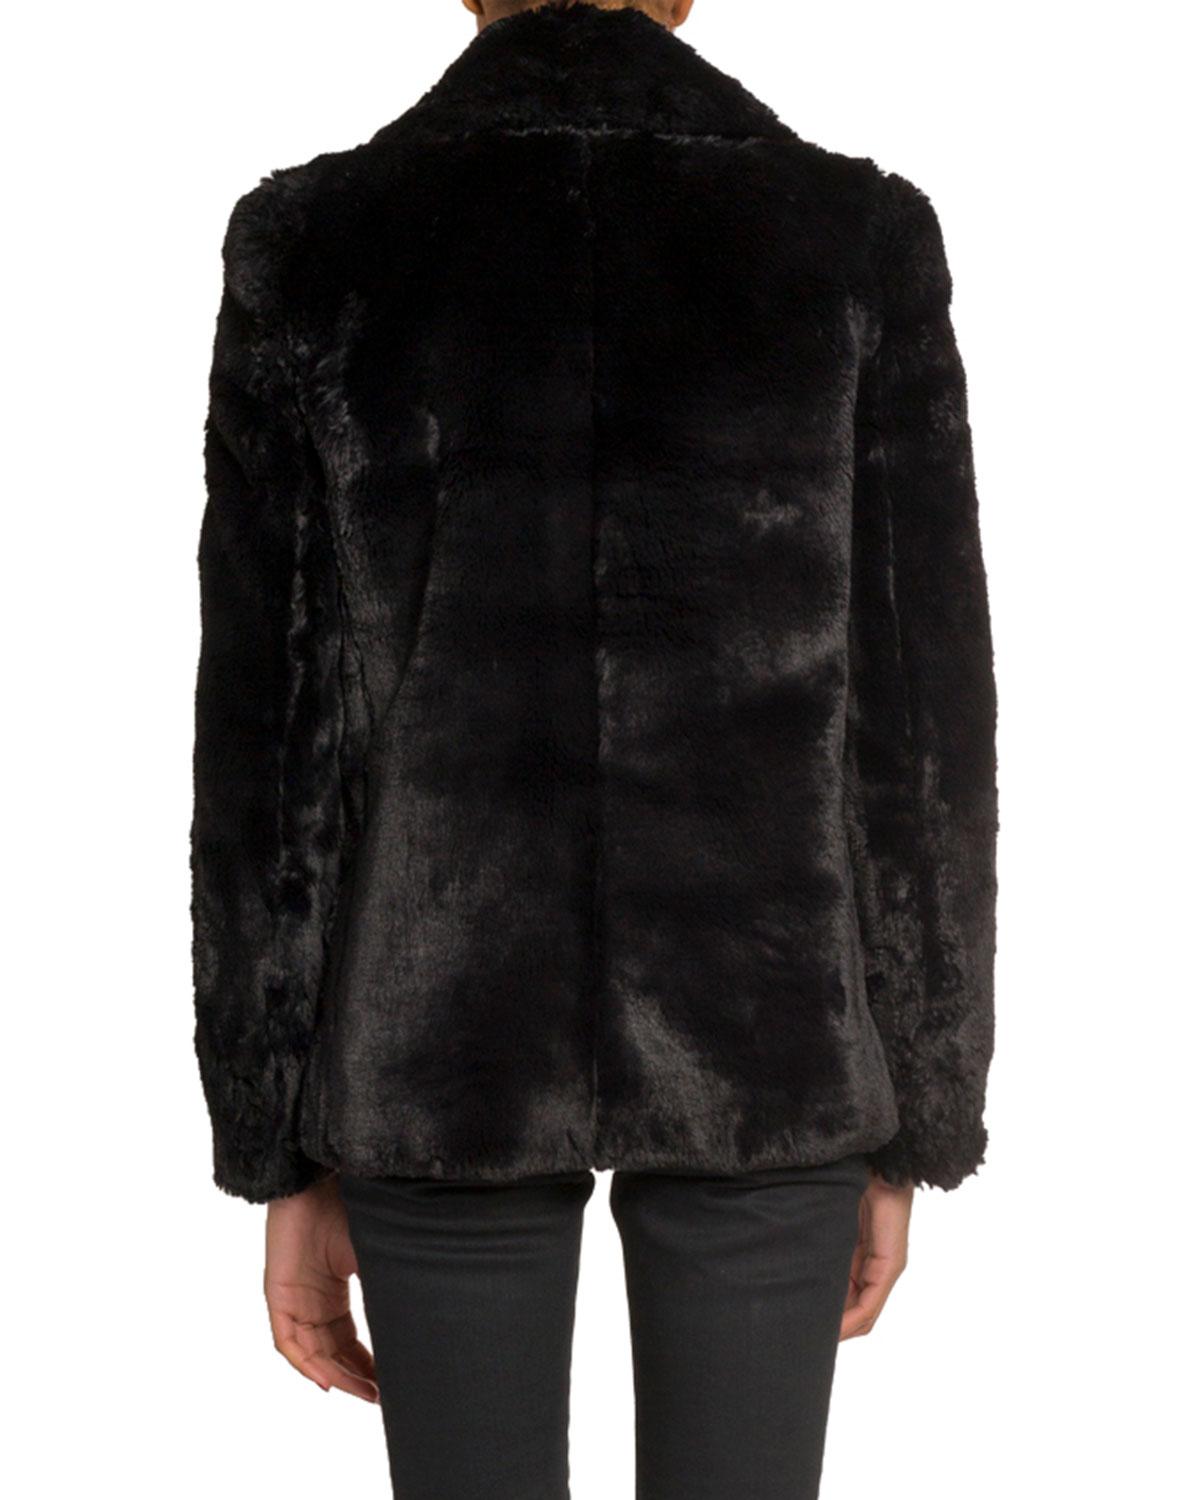 Saint Laurent Faux-fur Double-breasted Coat in Black - Lyst